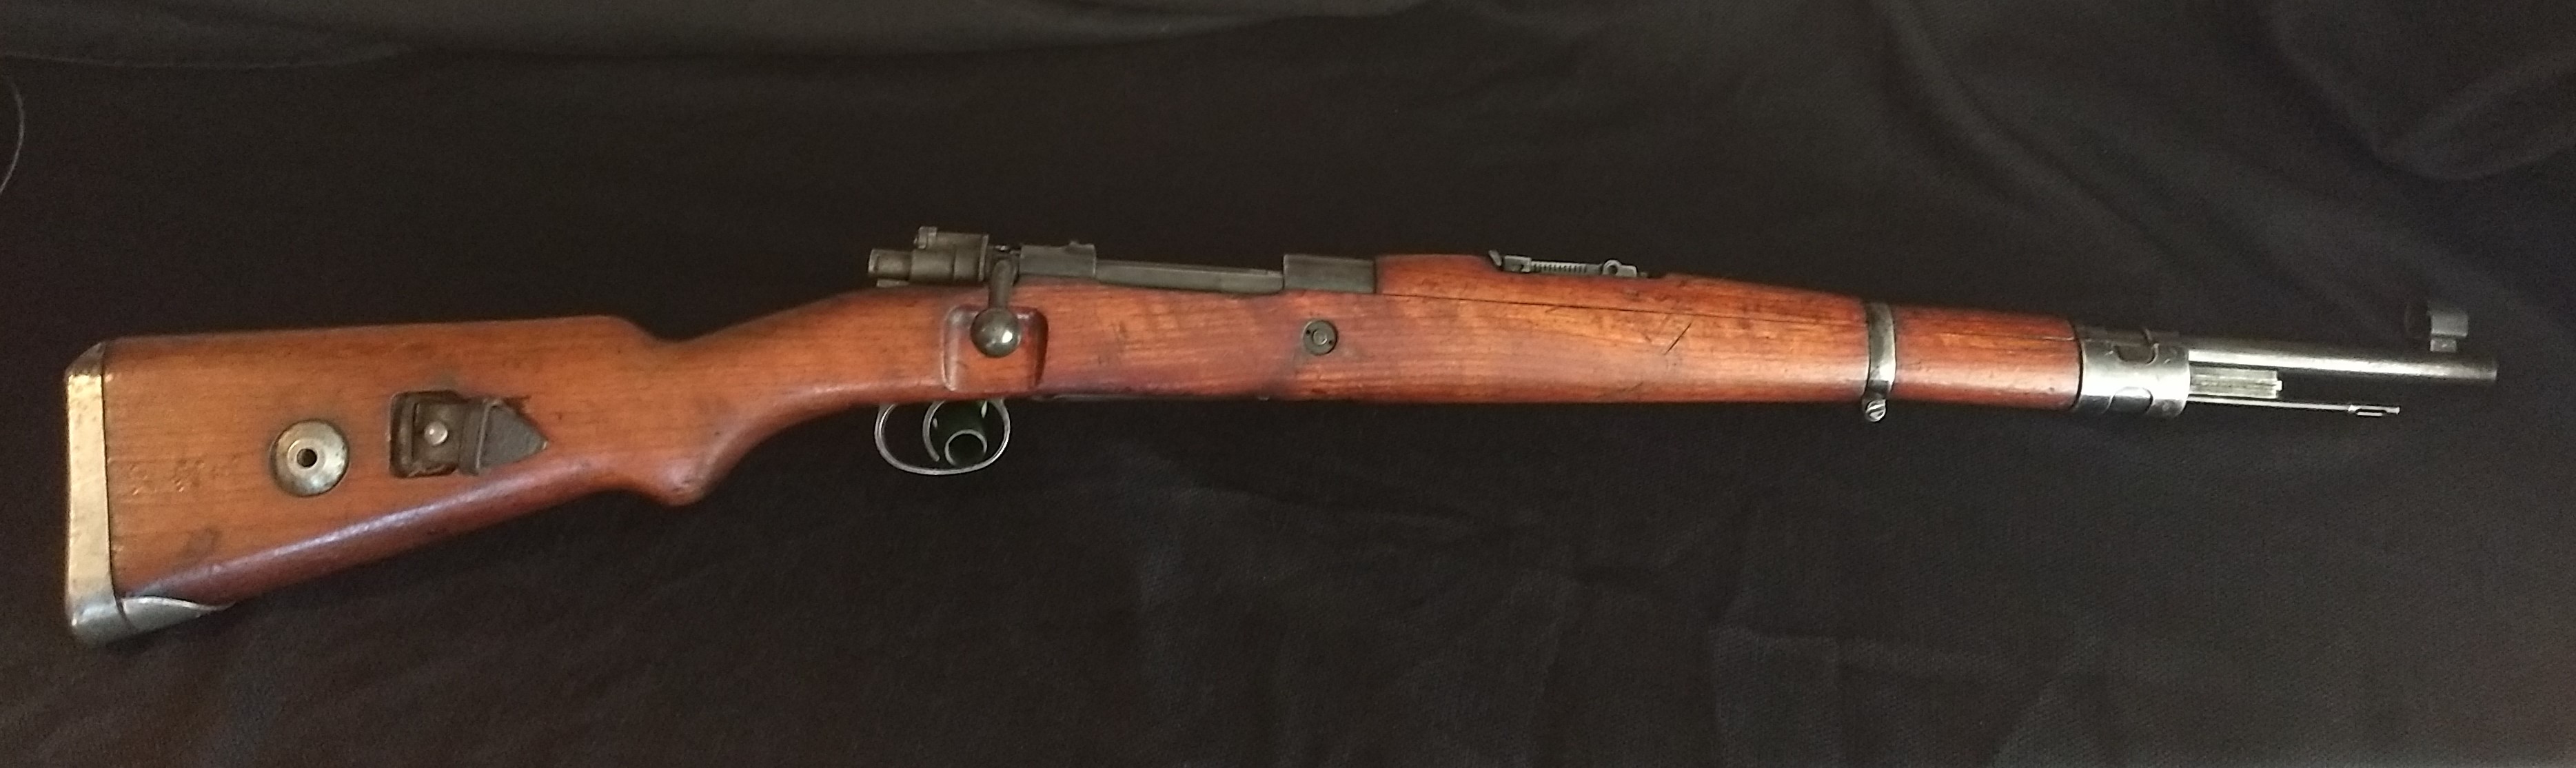 german mauser rifle ww2